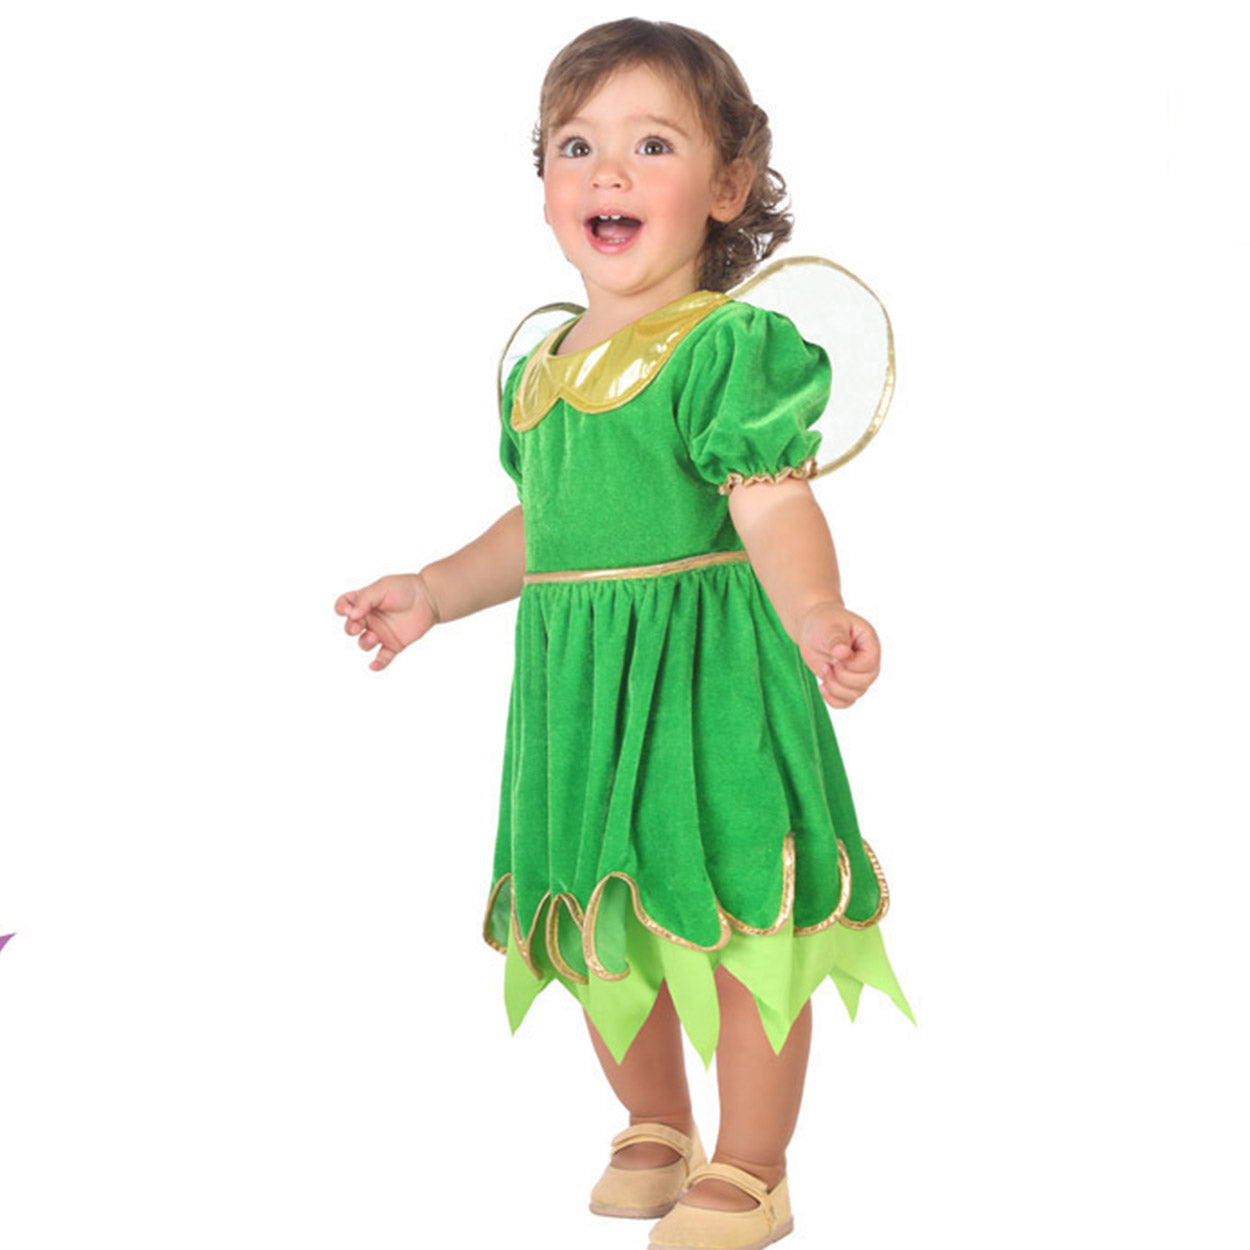 Costume Baby Trilli Fata Verde Tg 12/36 Mesi